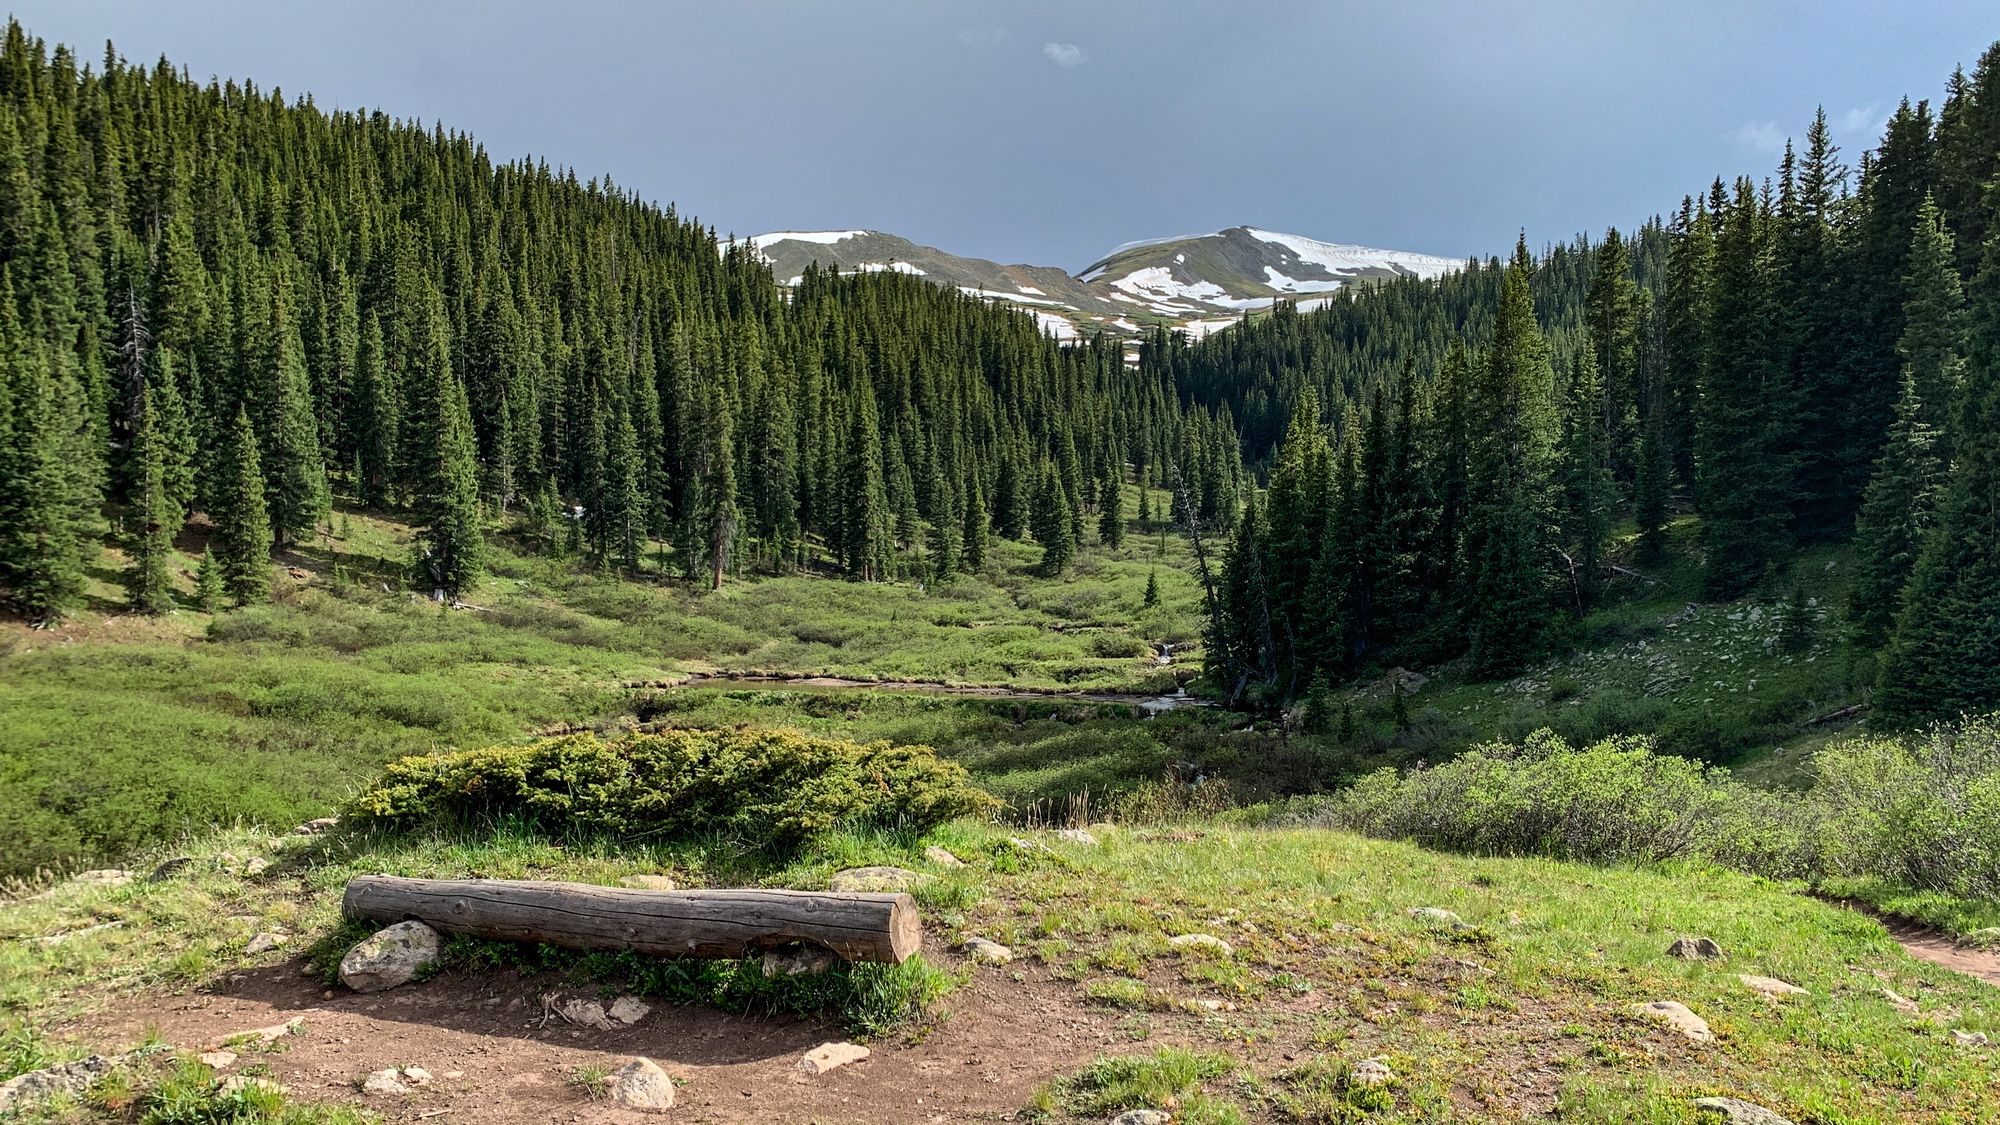 Colorado Trail - napříč Rocky Mountains (1)